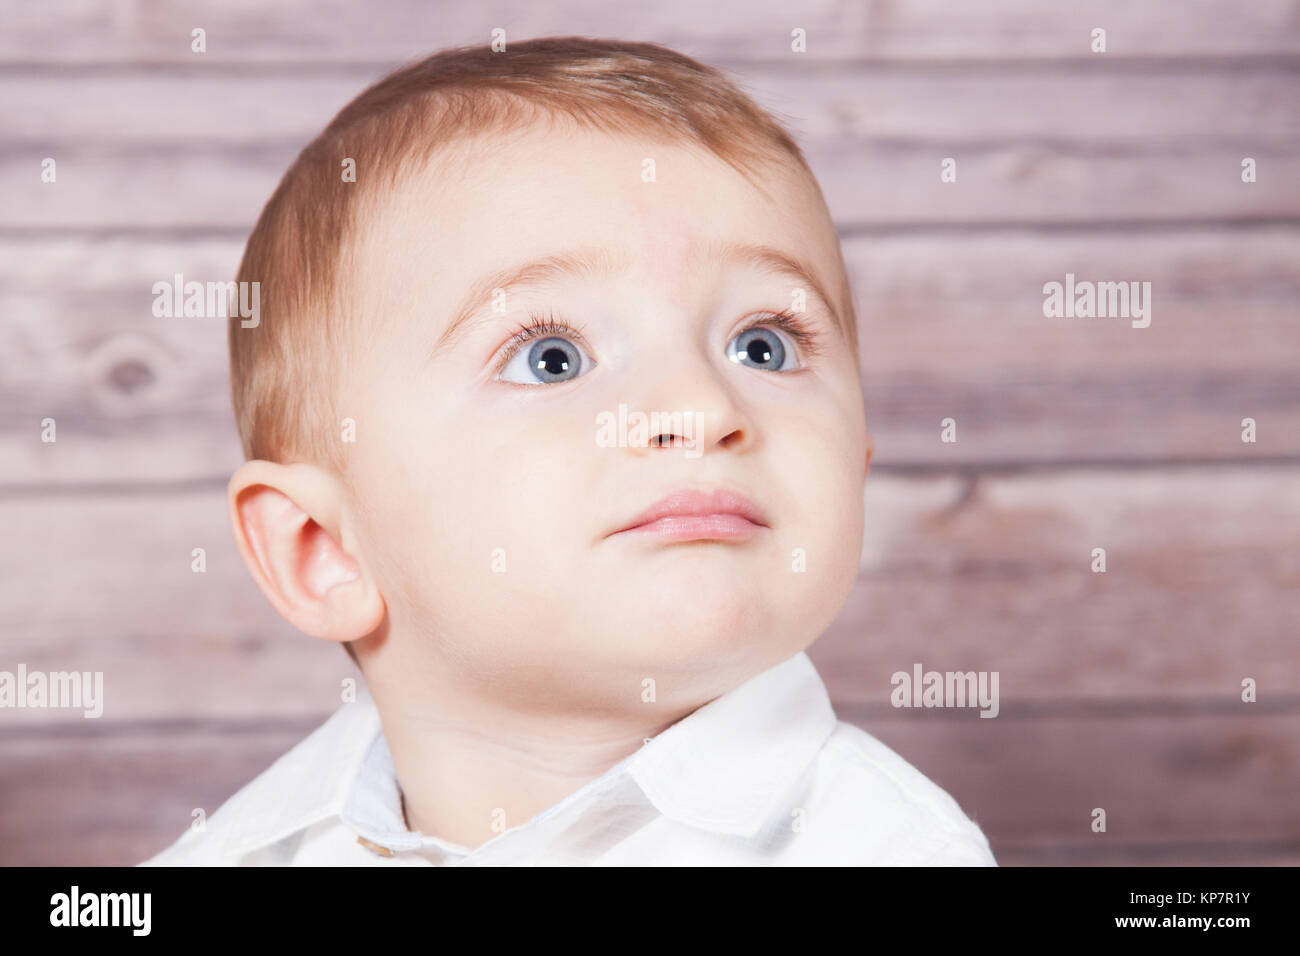 Baby boy portrait Stock Photo